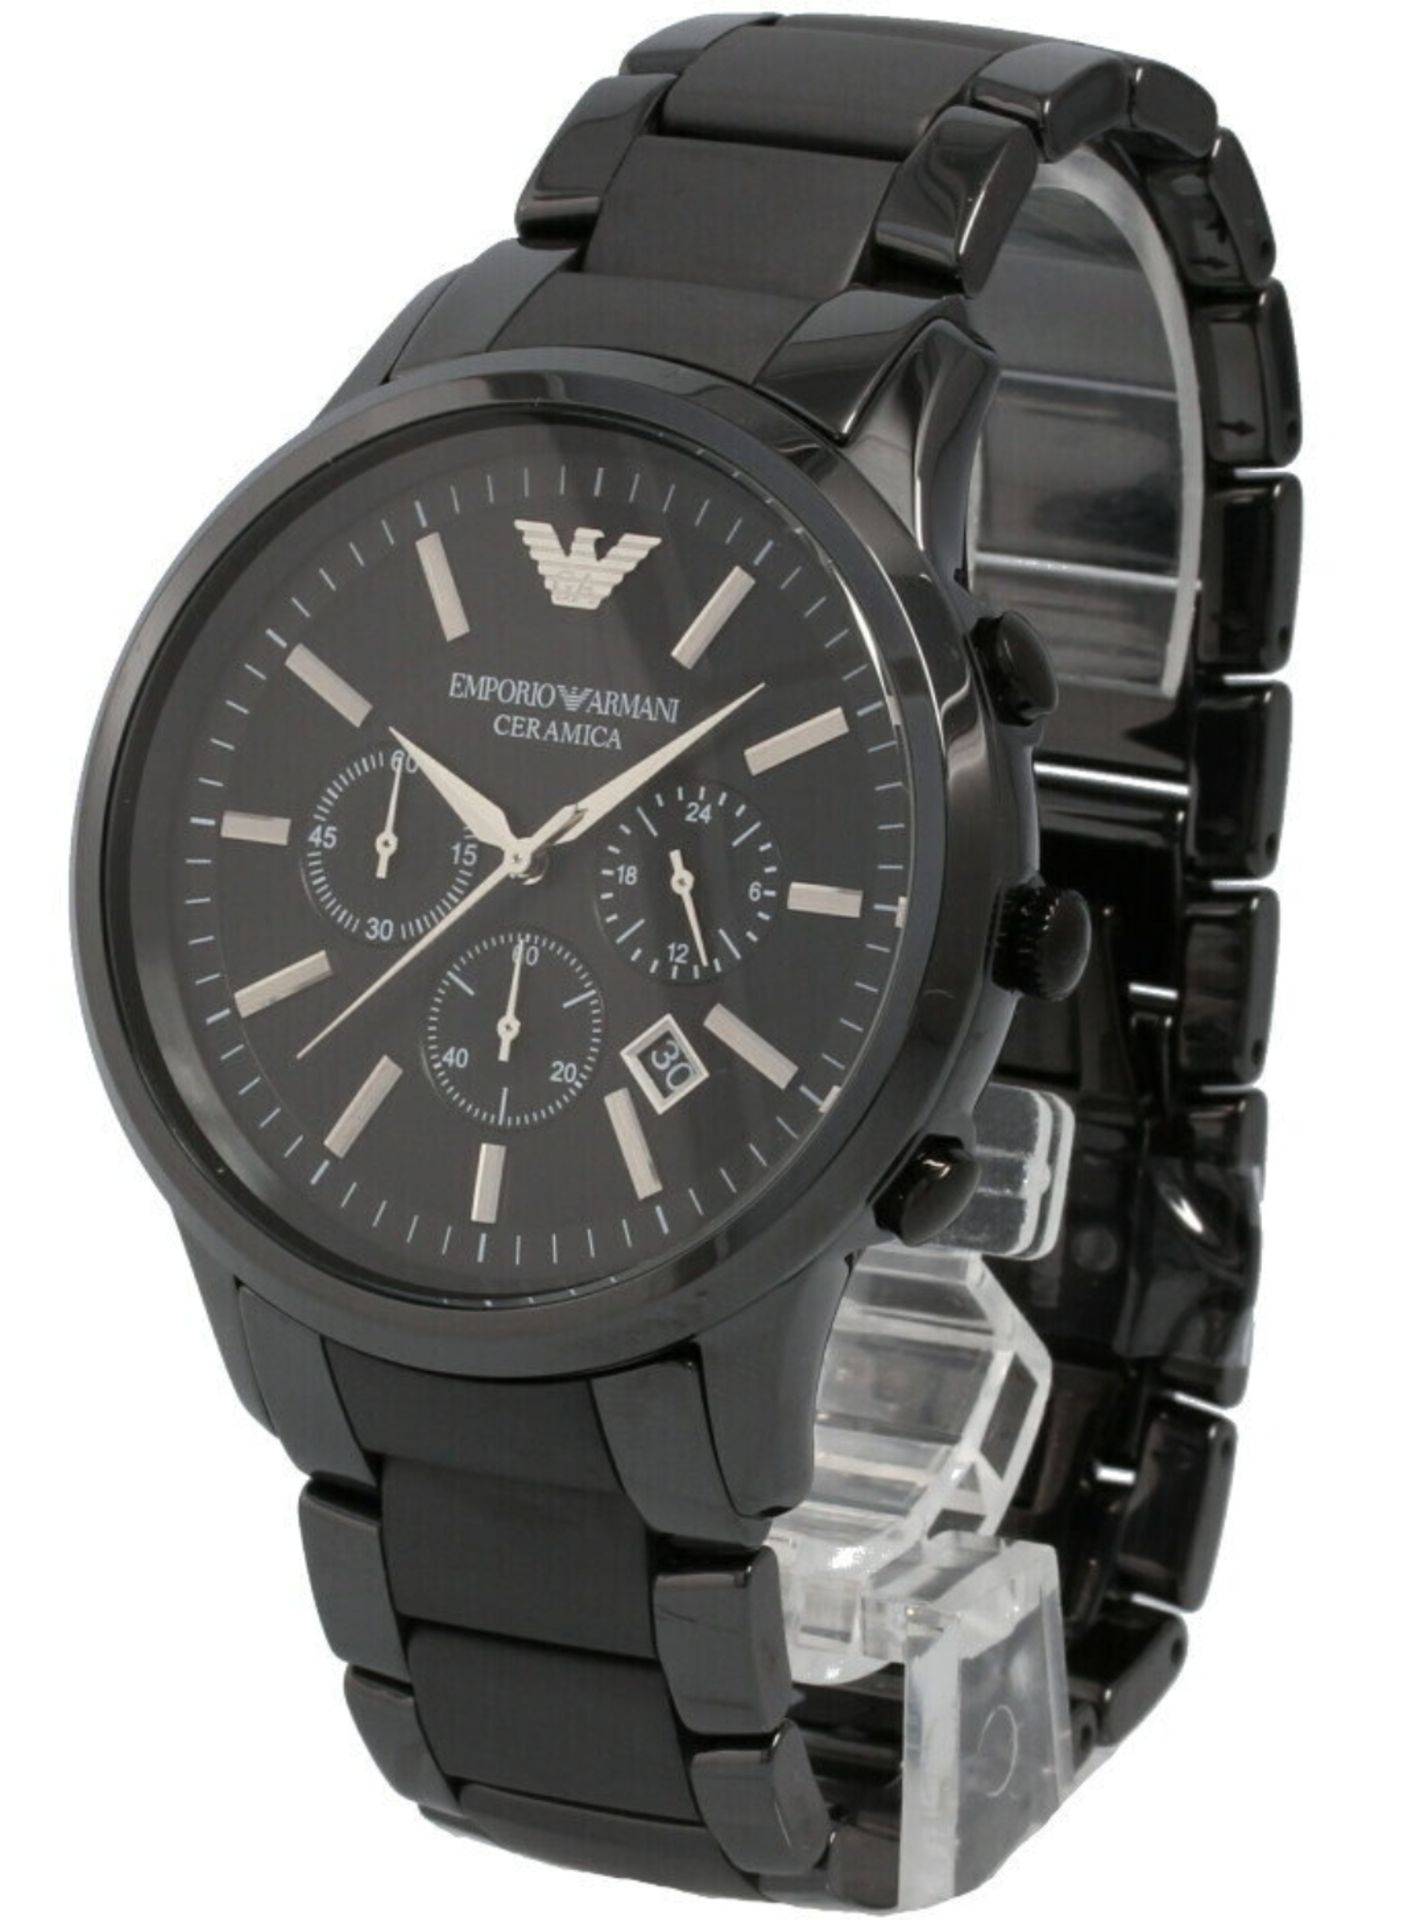 Emporio Armani AR1451 Men's Ceramica Black Ceramic Bracelet Quartz Chronograph Watch - Image 4 of 6